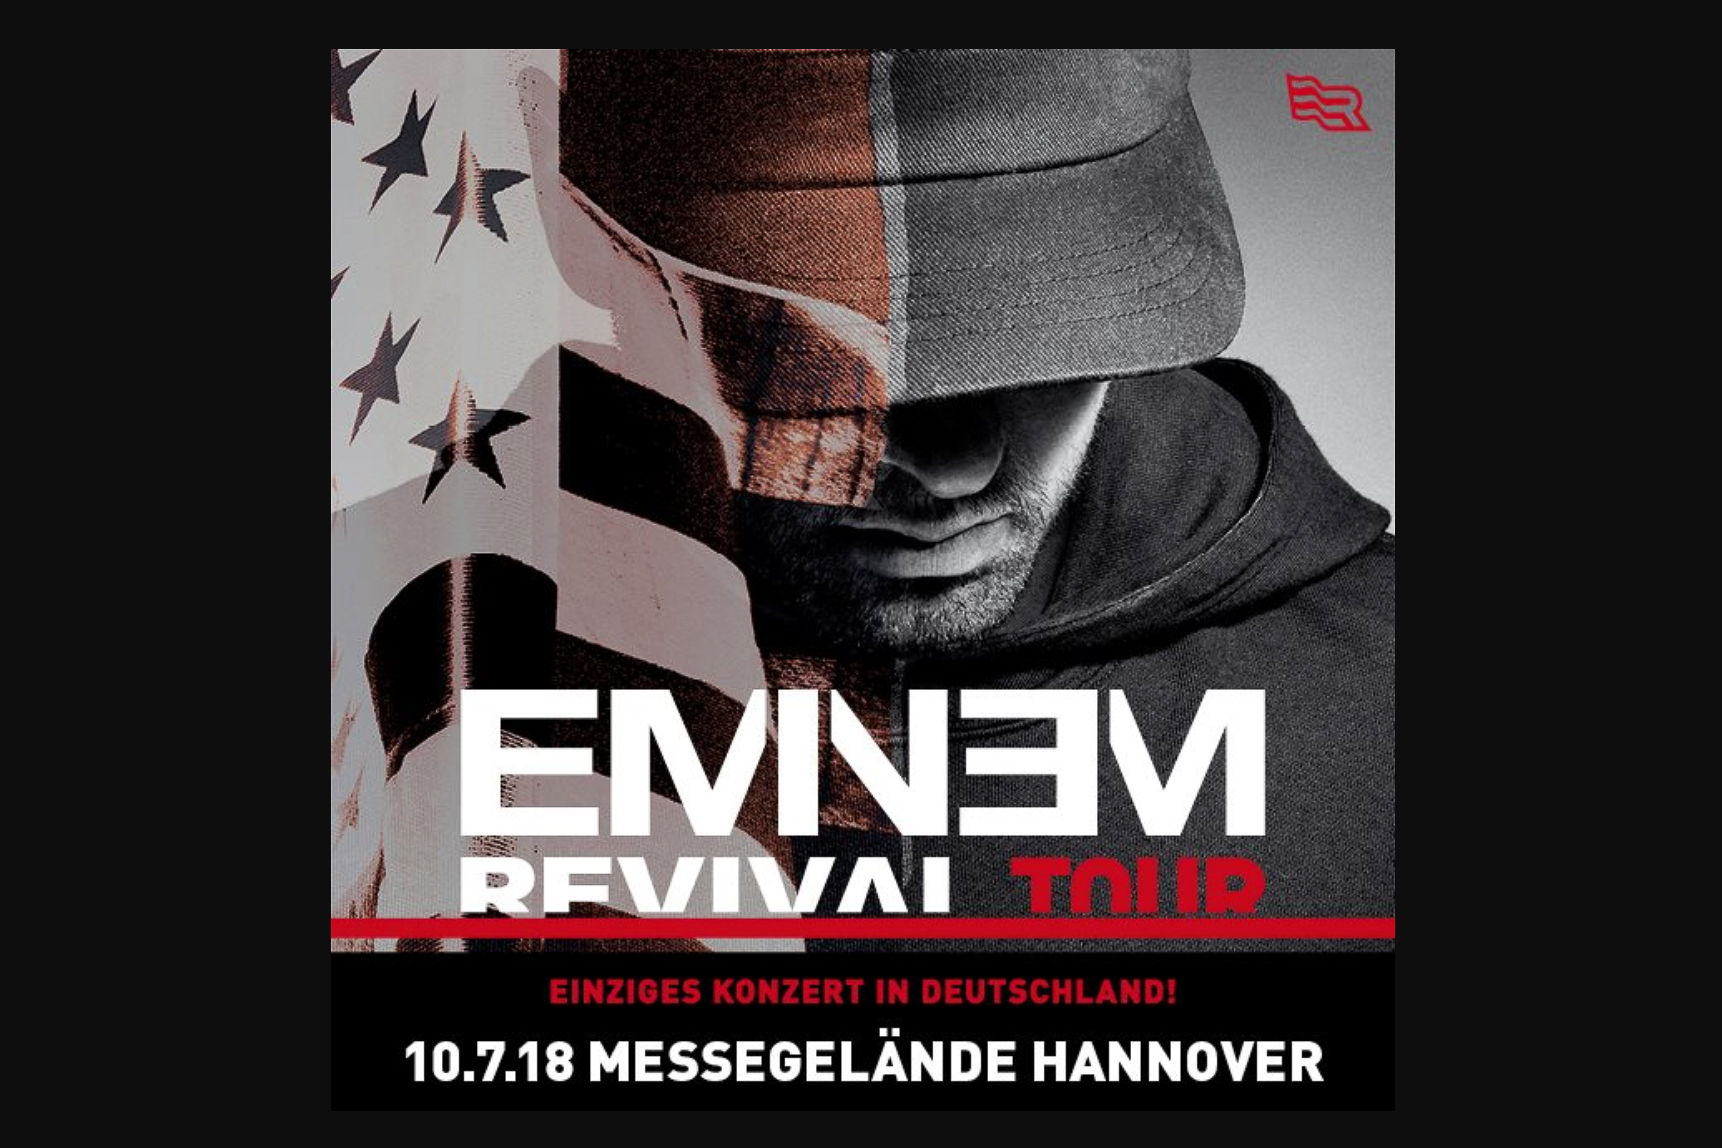 Eminem Der King of HipHop in Deutschland! Music Your Live